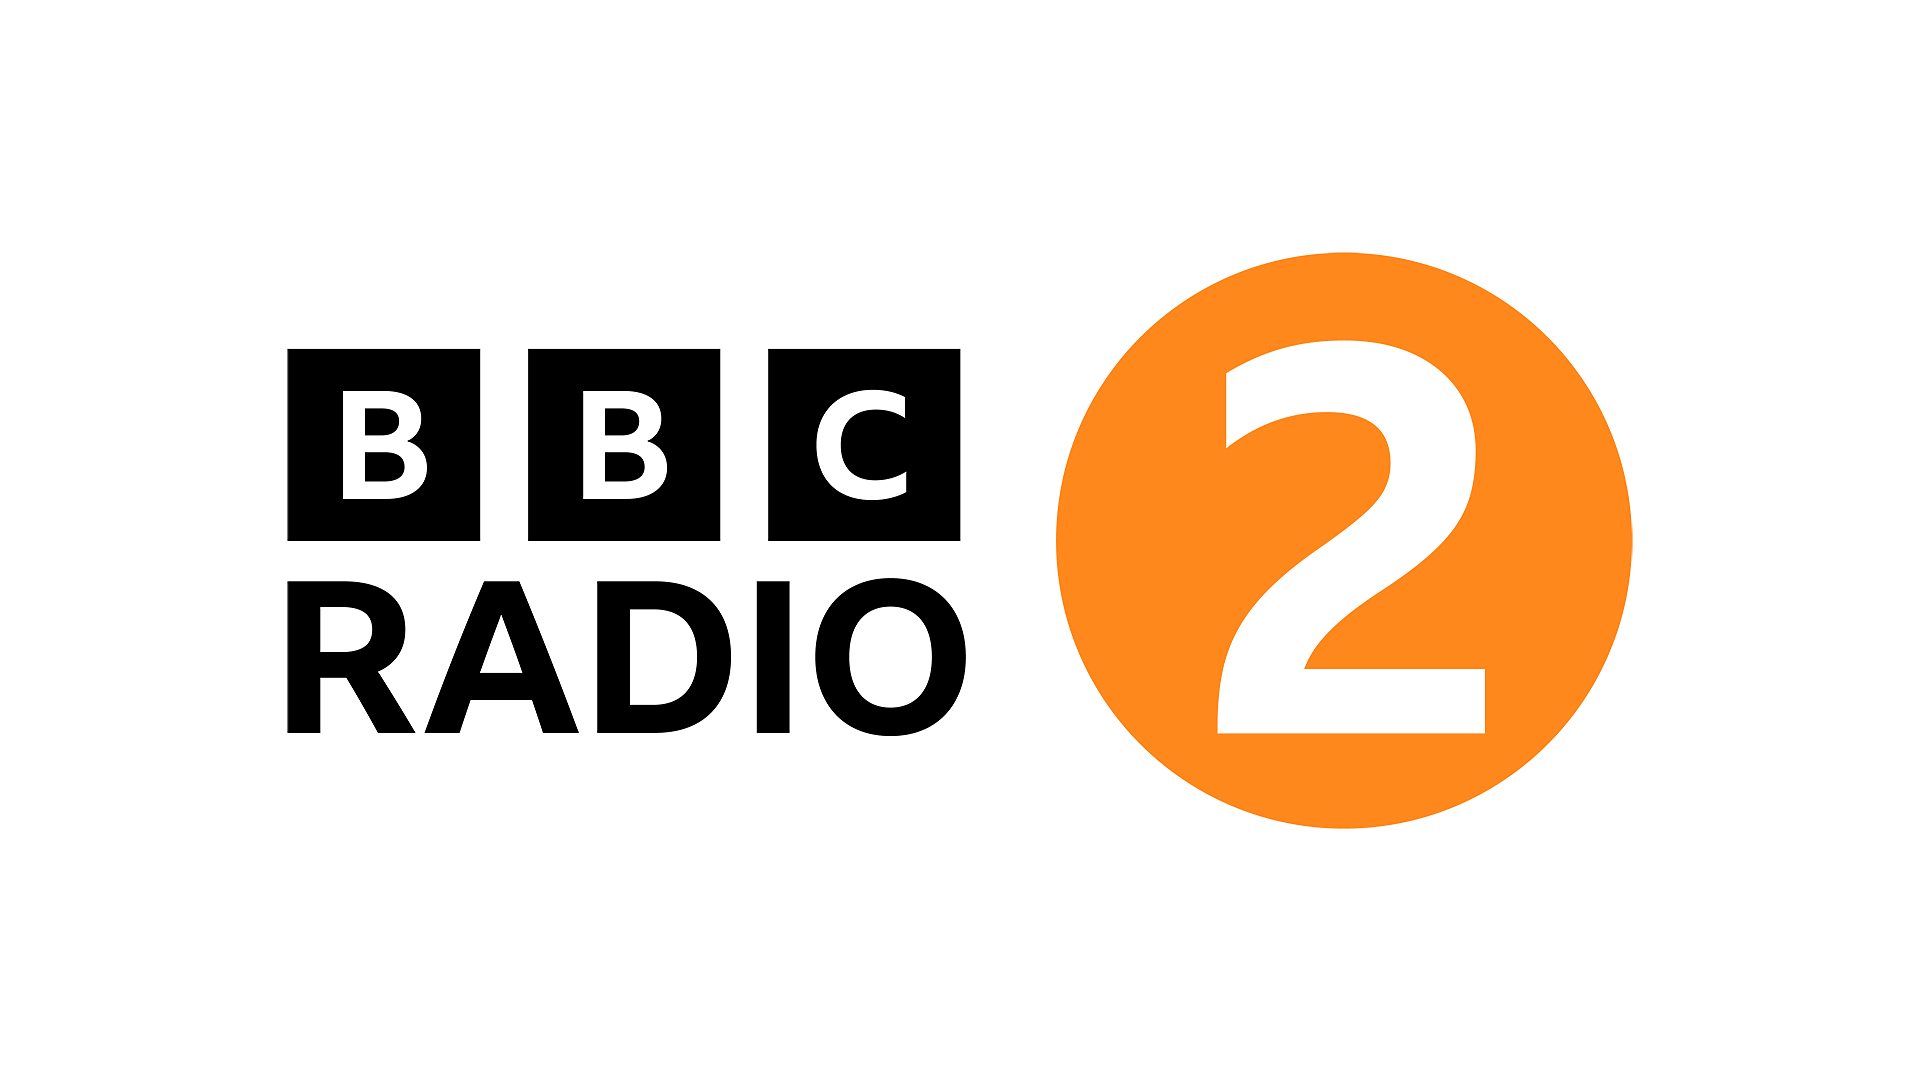 BBC - About Radio 2